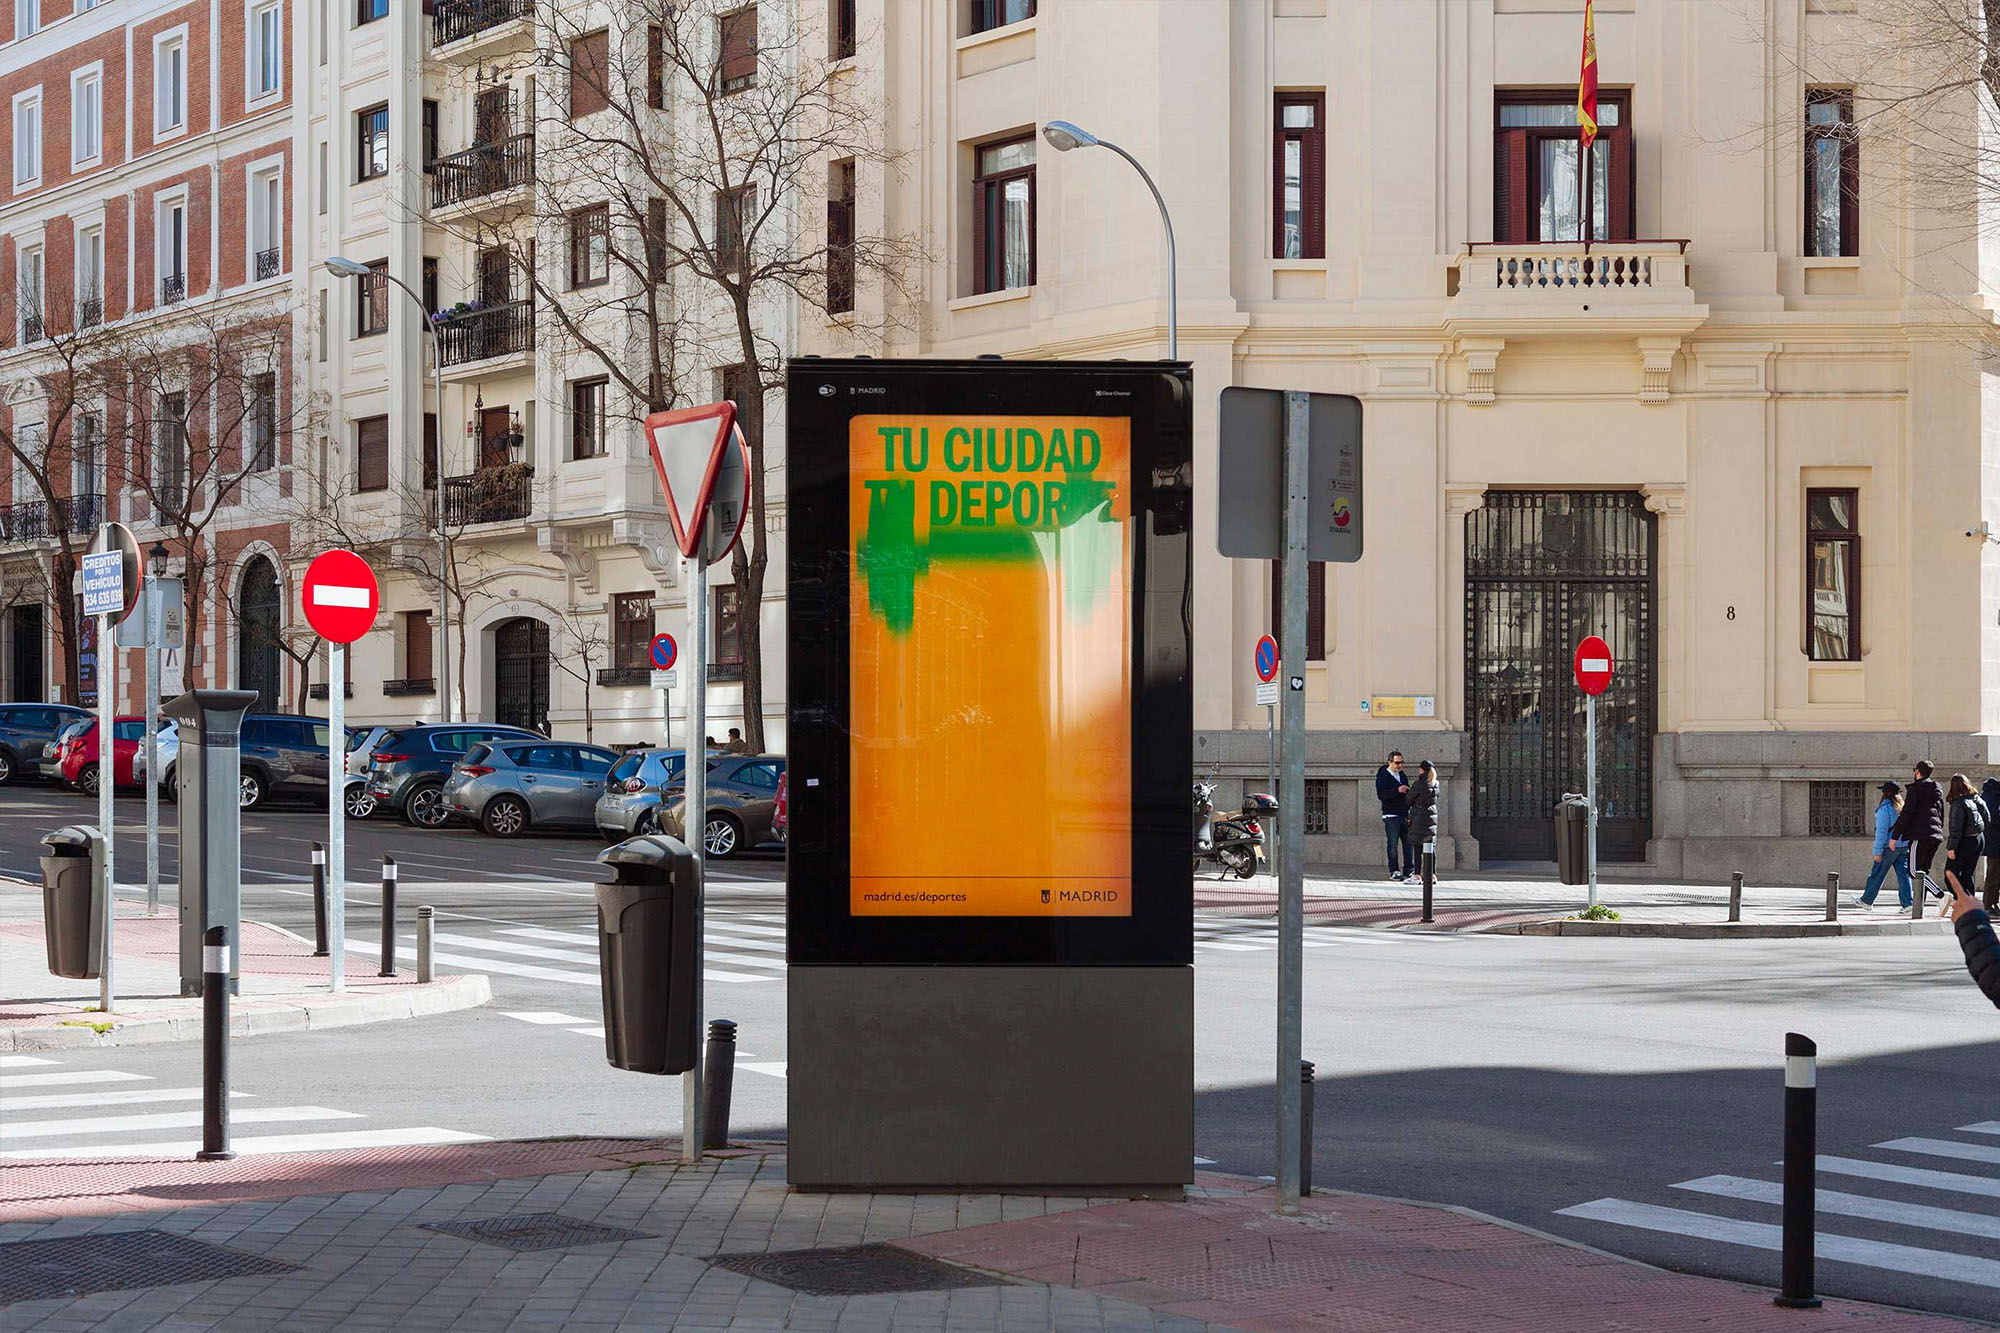 Atipus | Barcelona-based graphic design studio